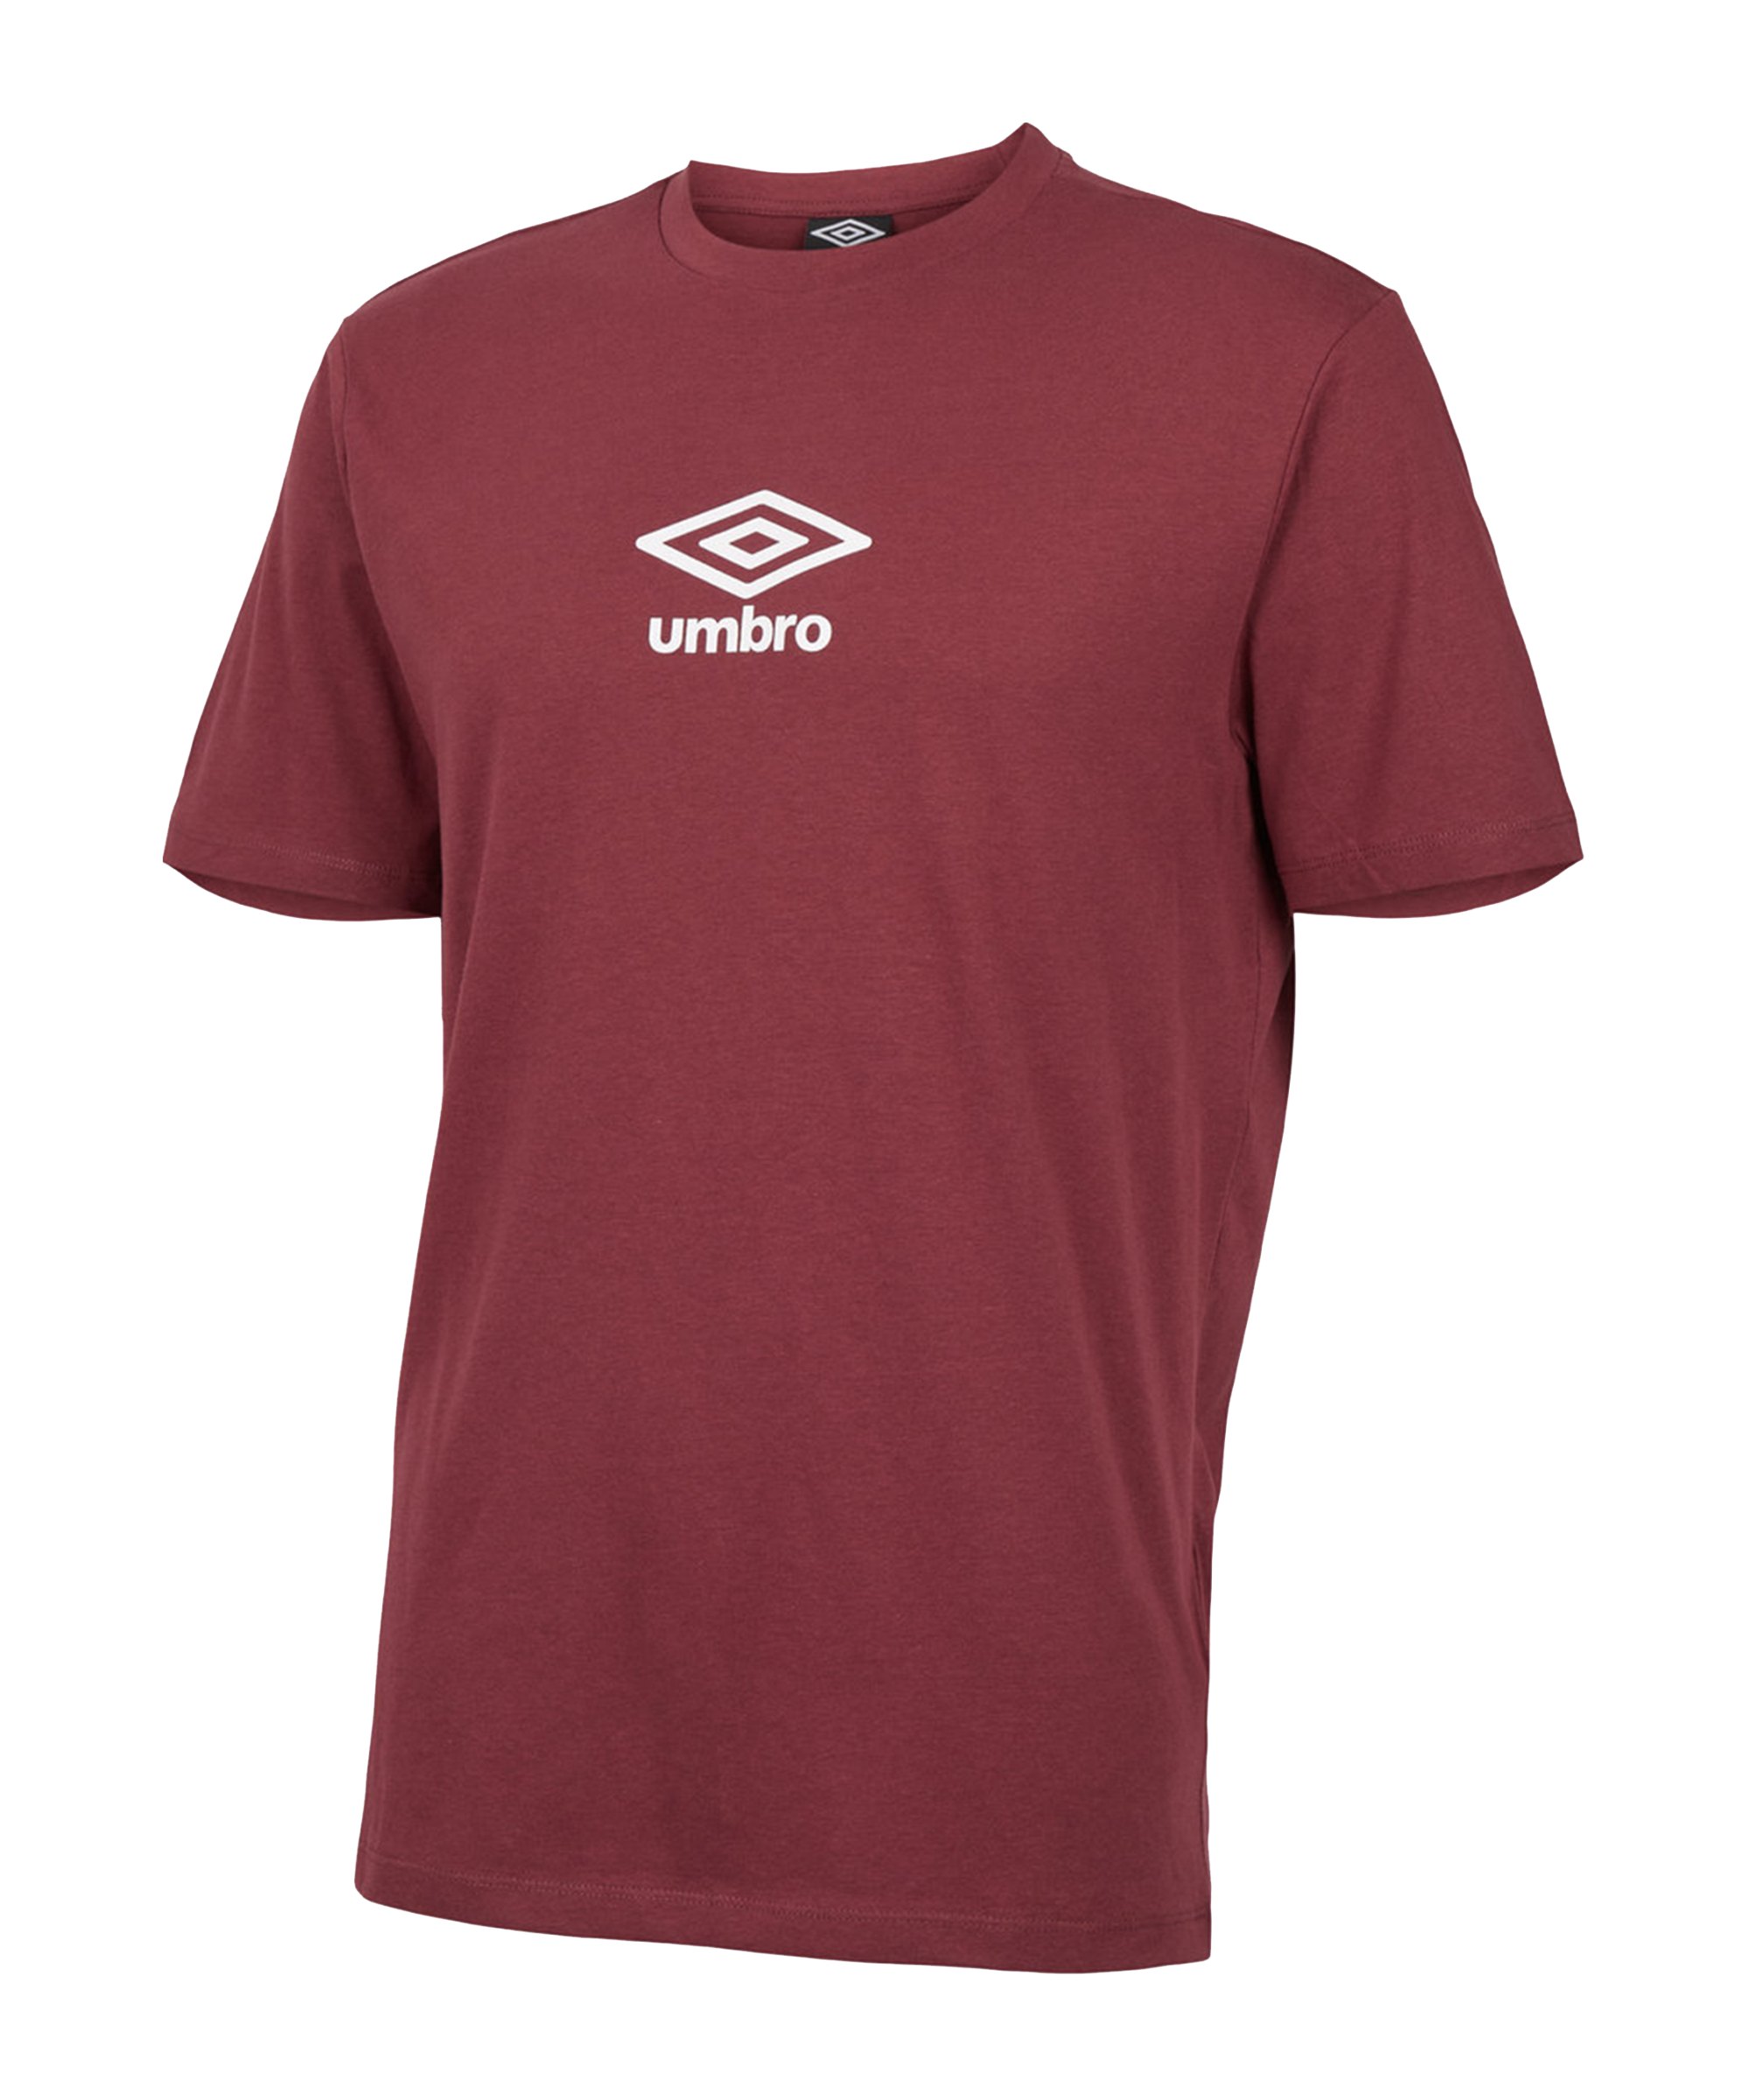 Umbro Active Style Emblem T-Shirt Rot FHVA - rot